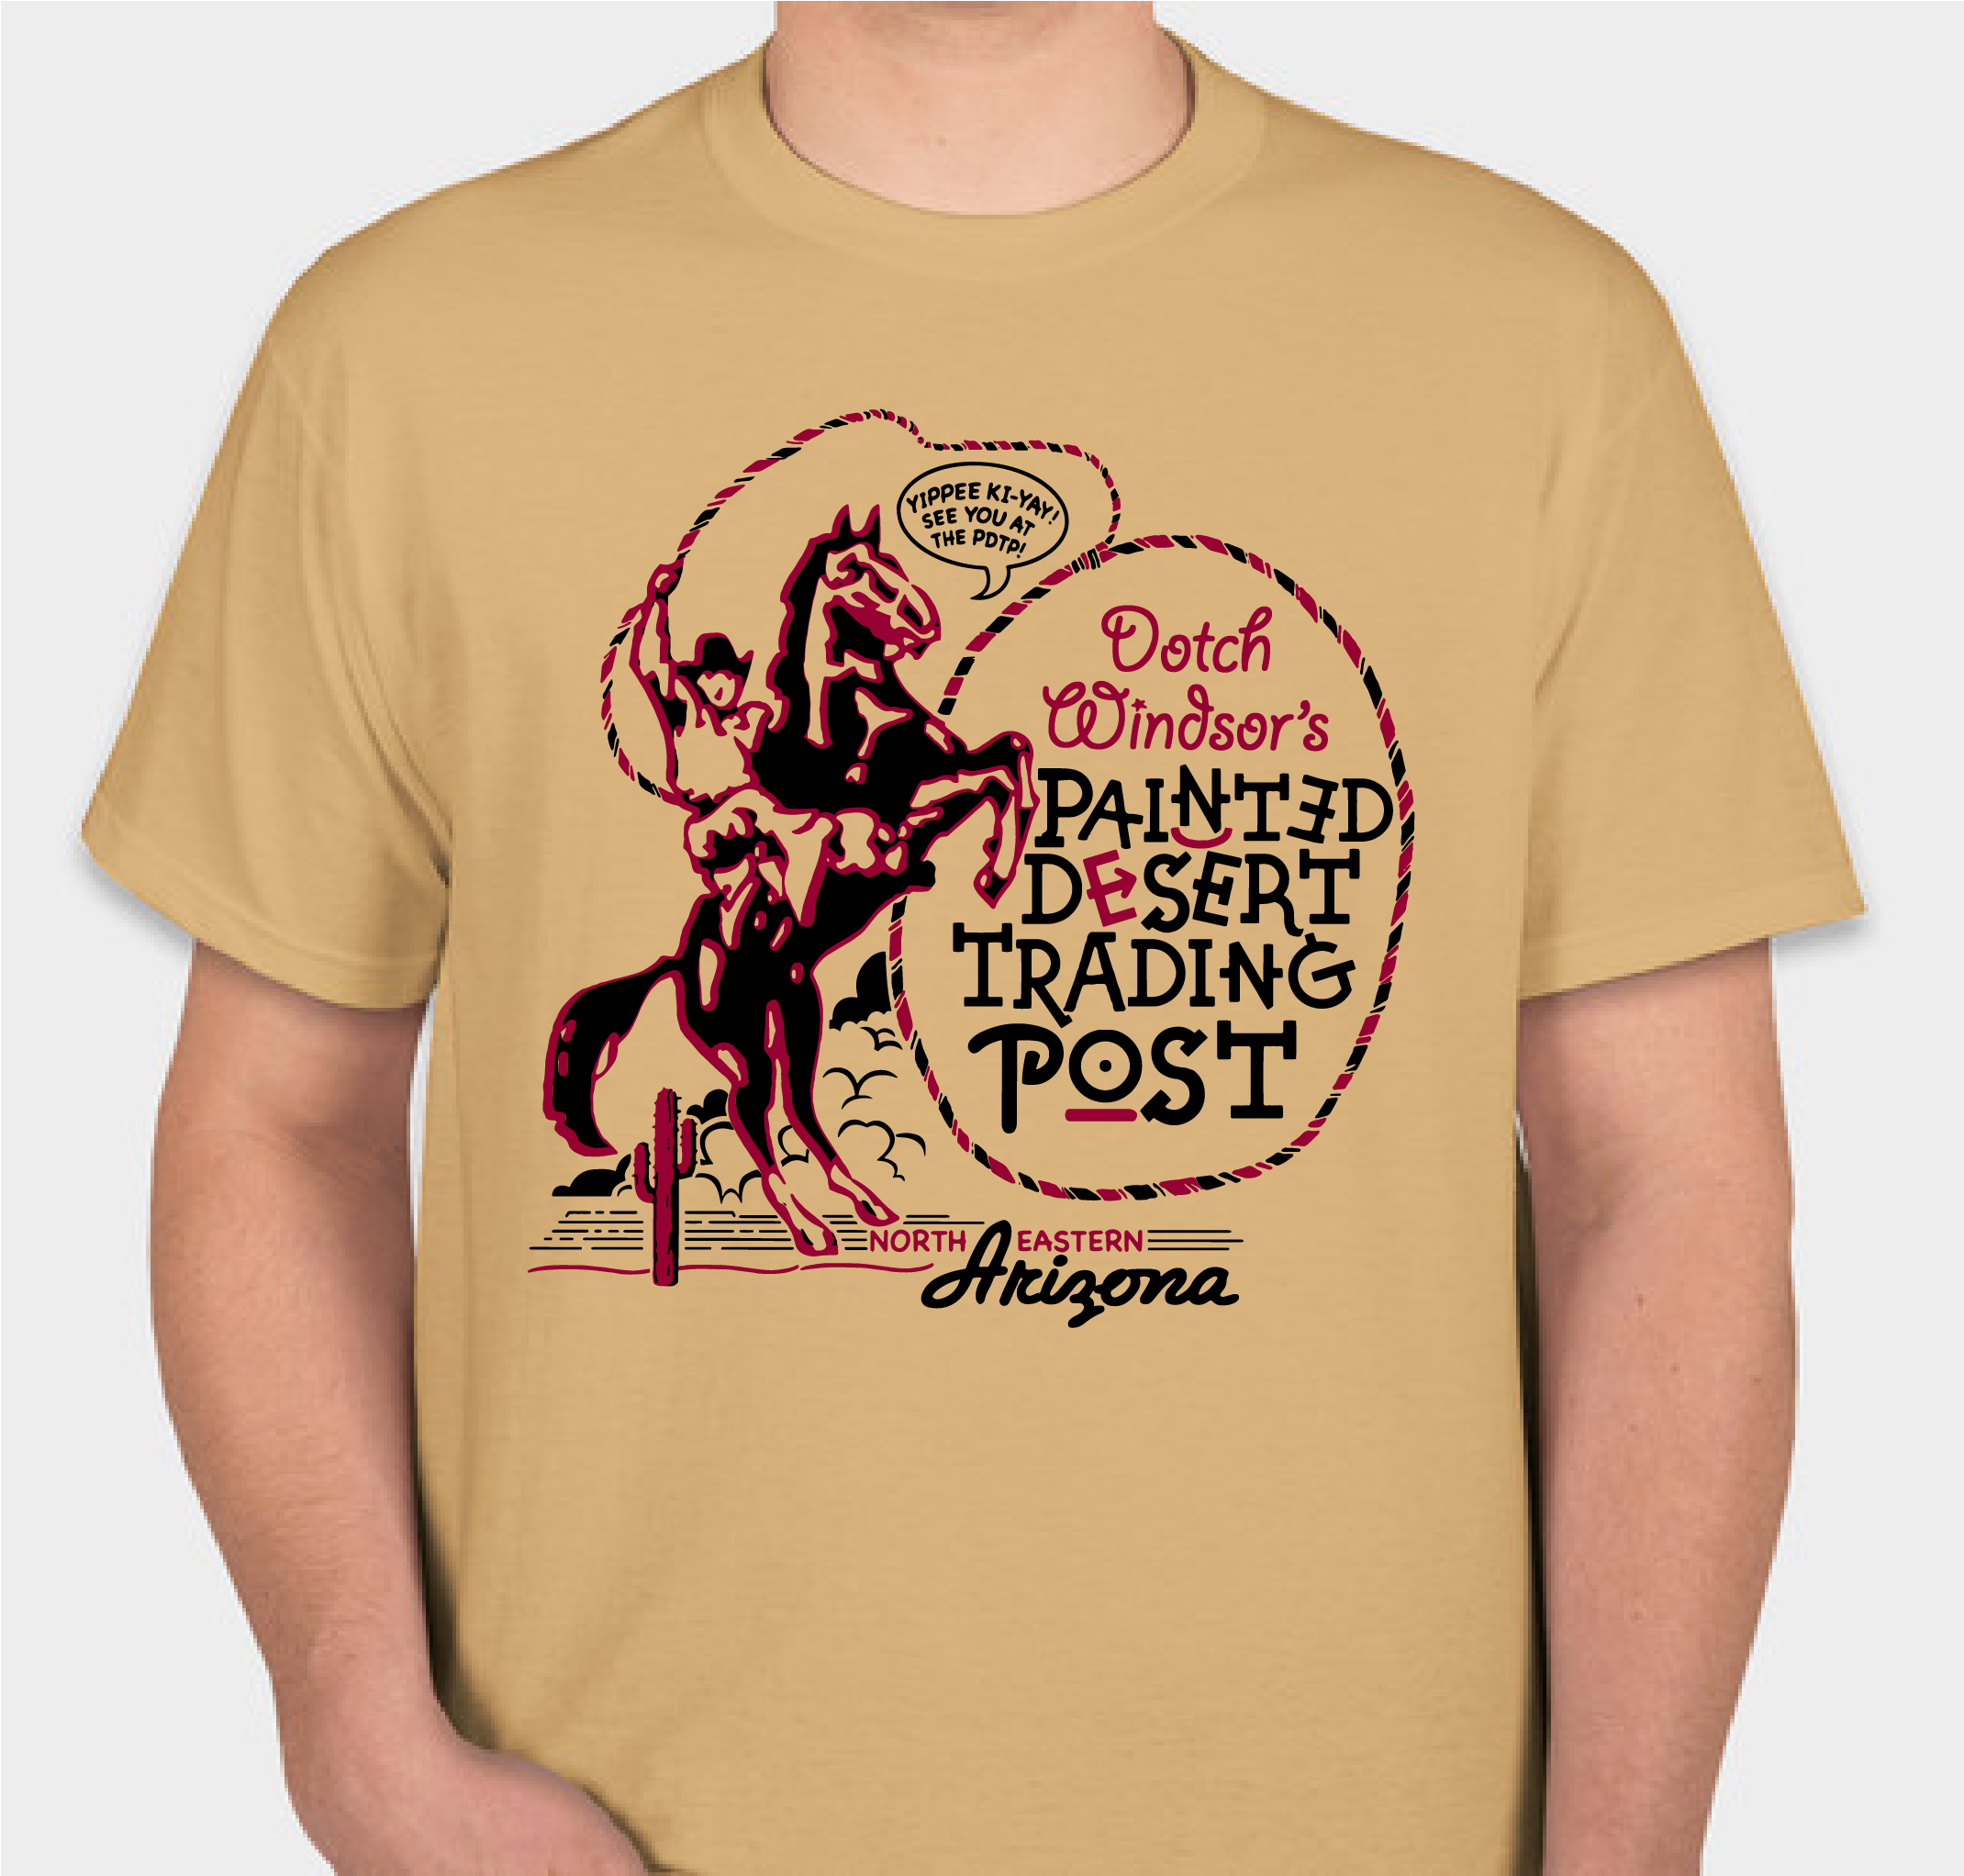 PAINTED DESERT TRADING POST - MAY 2021 Fundraiser - unisex shirt design - front